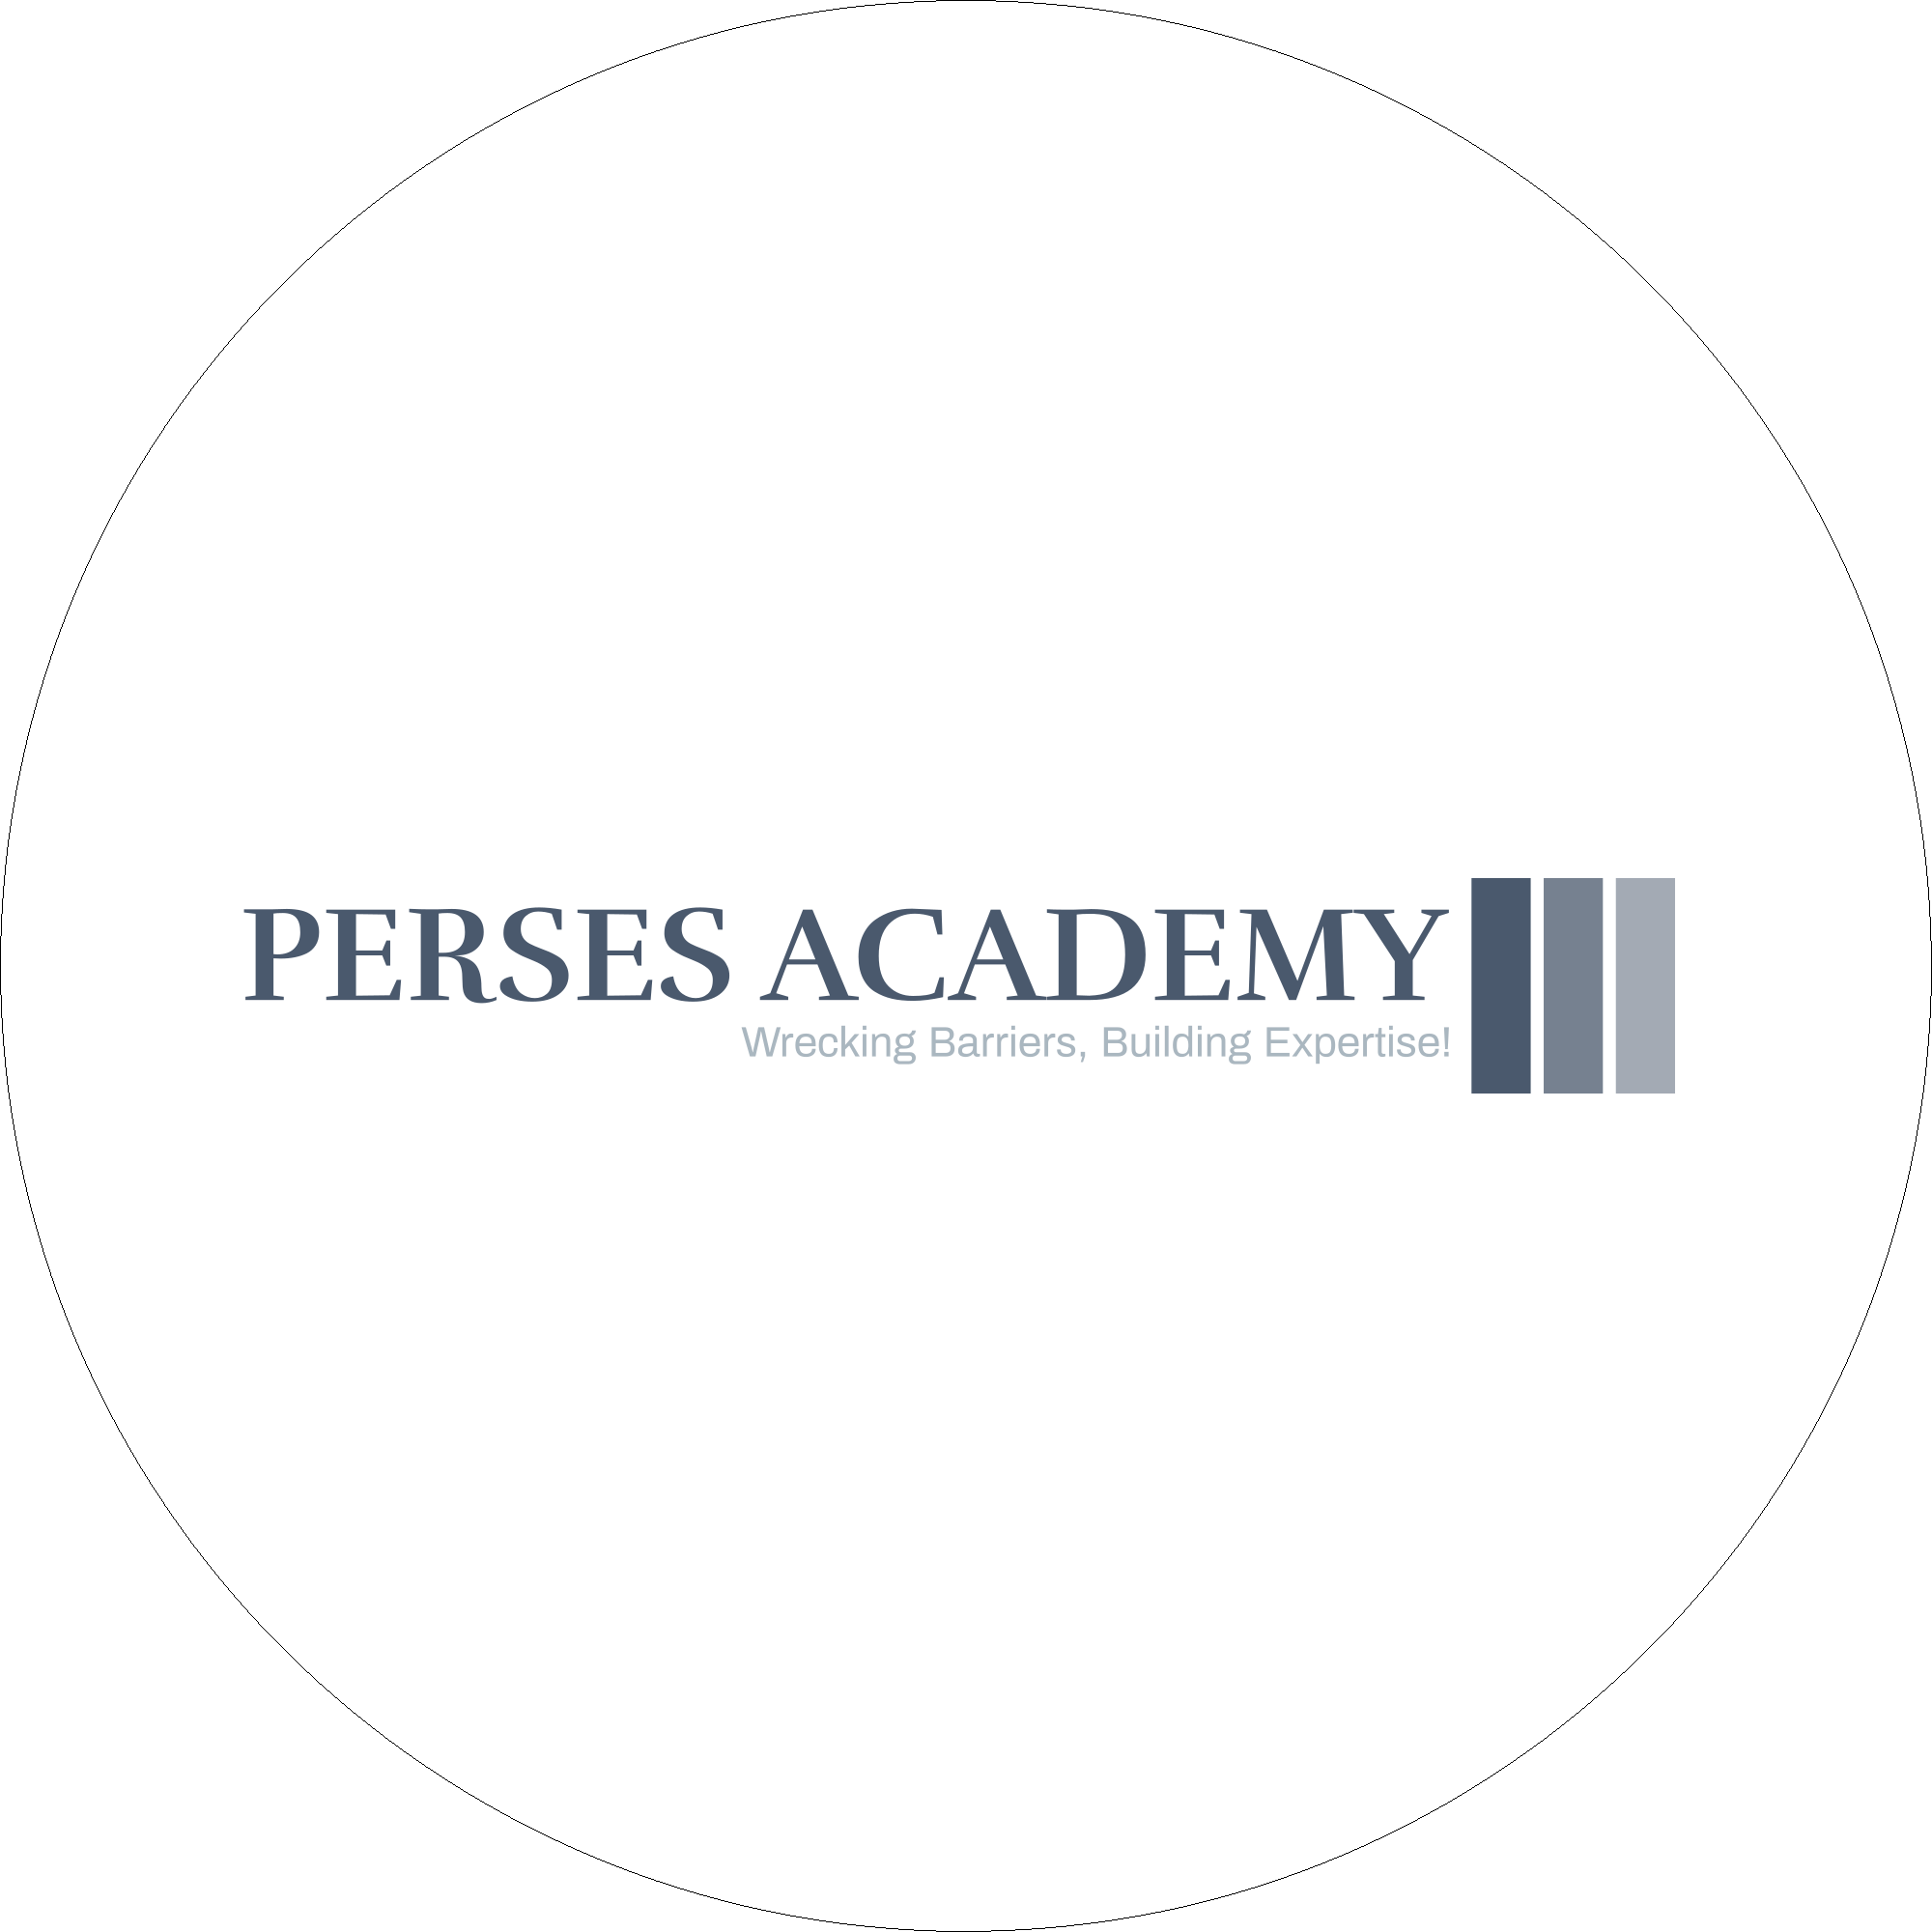 PERSES Academy